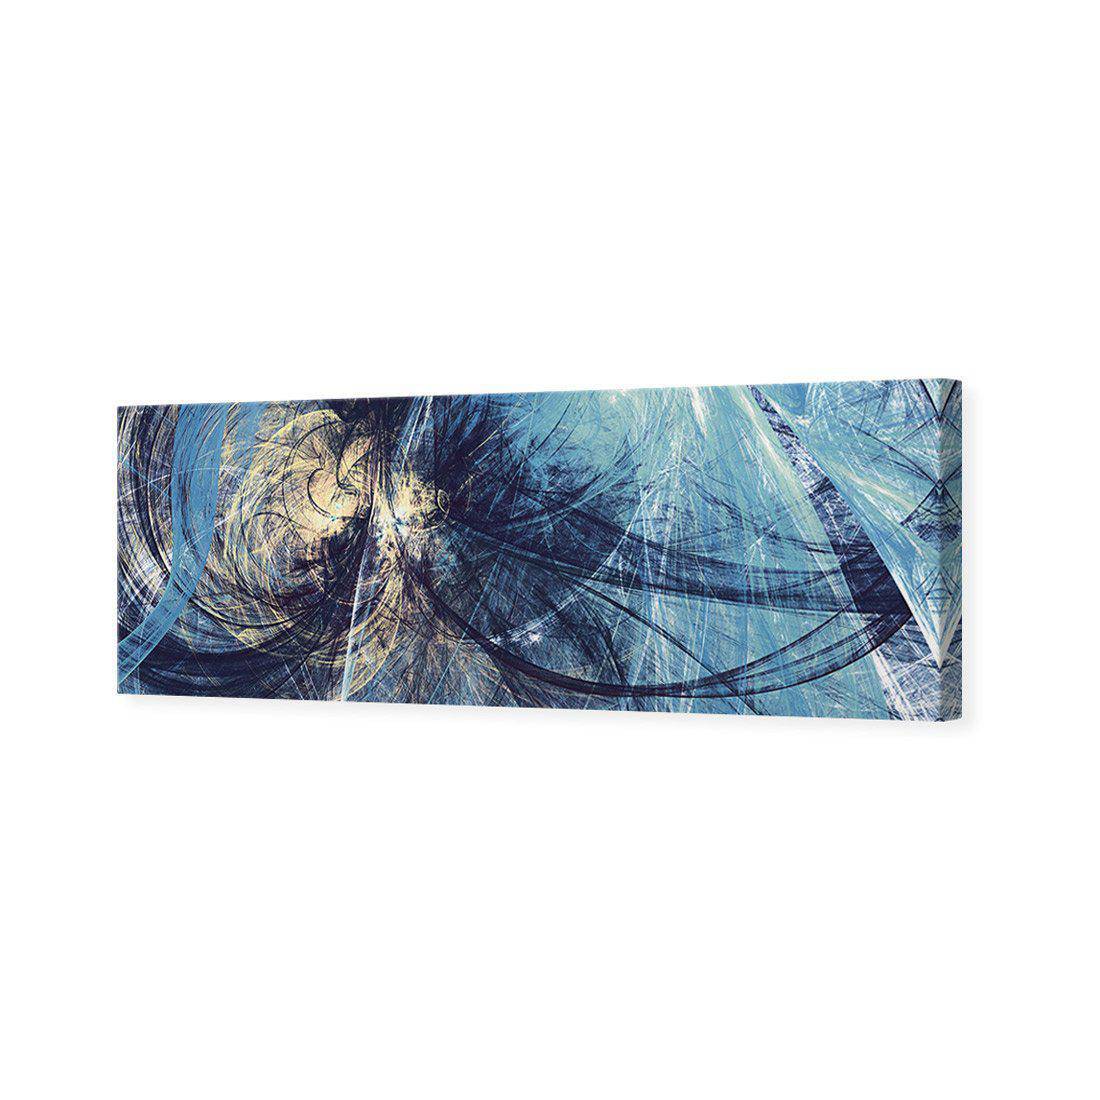 Underwater Peril Canvas Art-Canvas-Wall Art Designs-60x20cm-Canvas - No Frame-Wall Art Designs